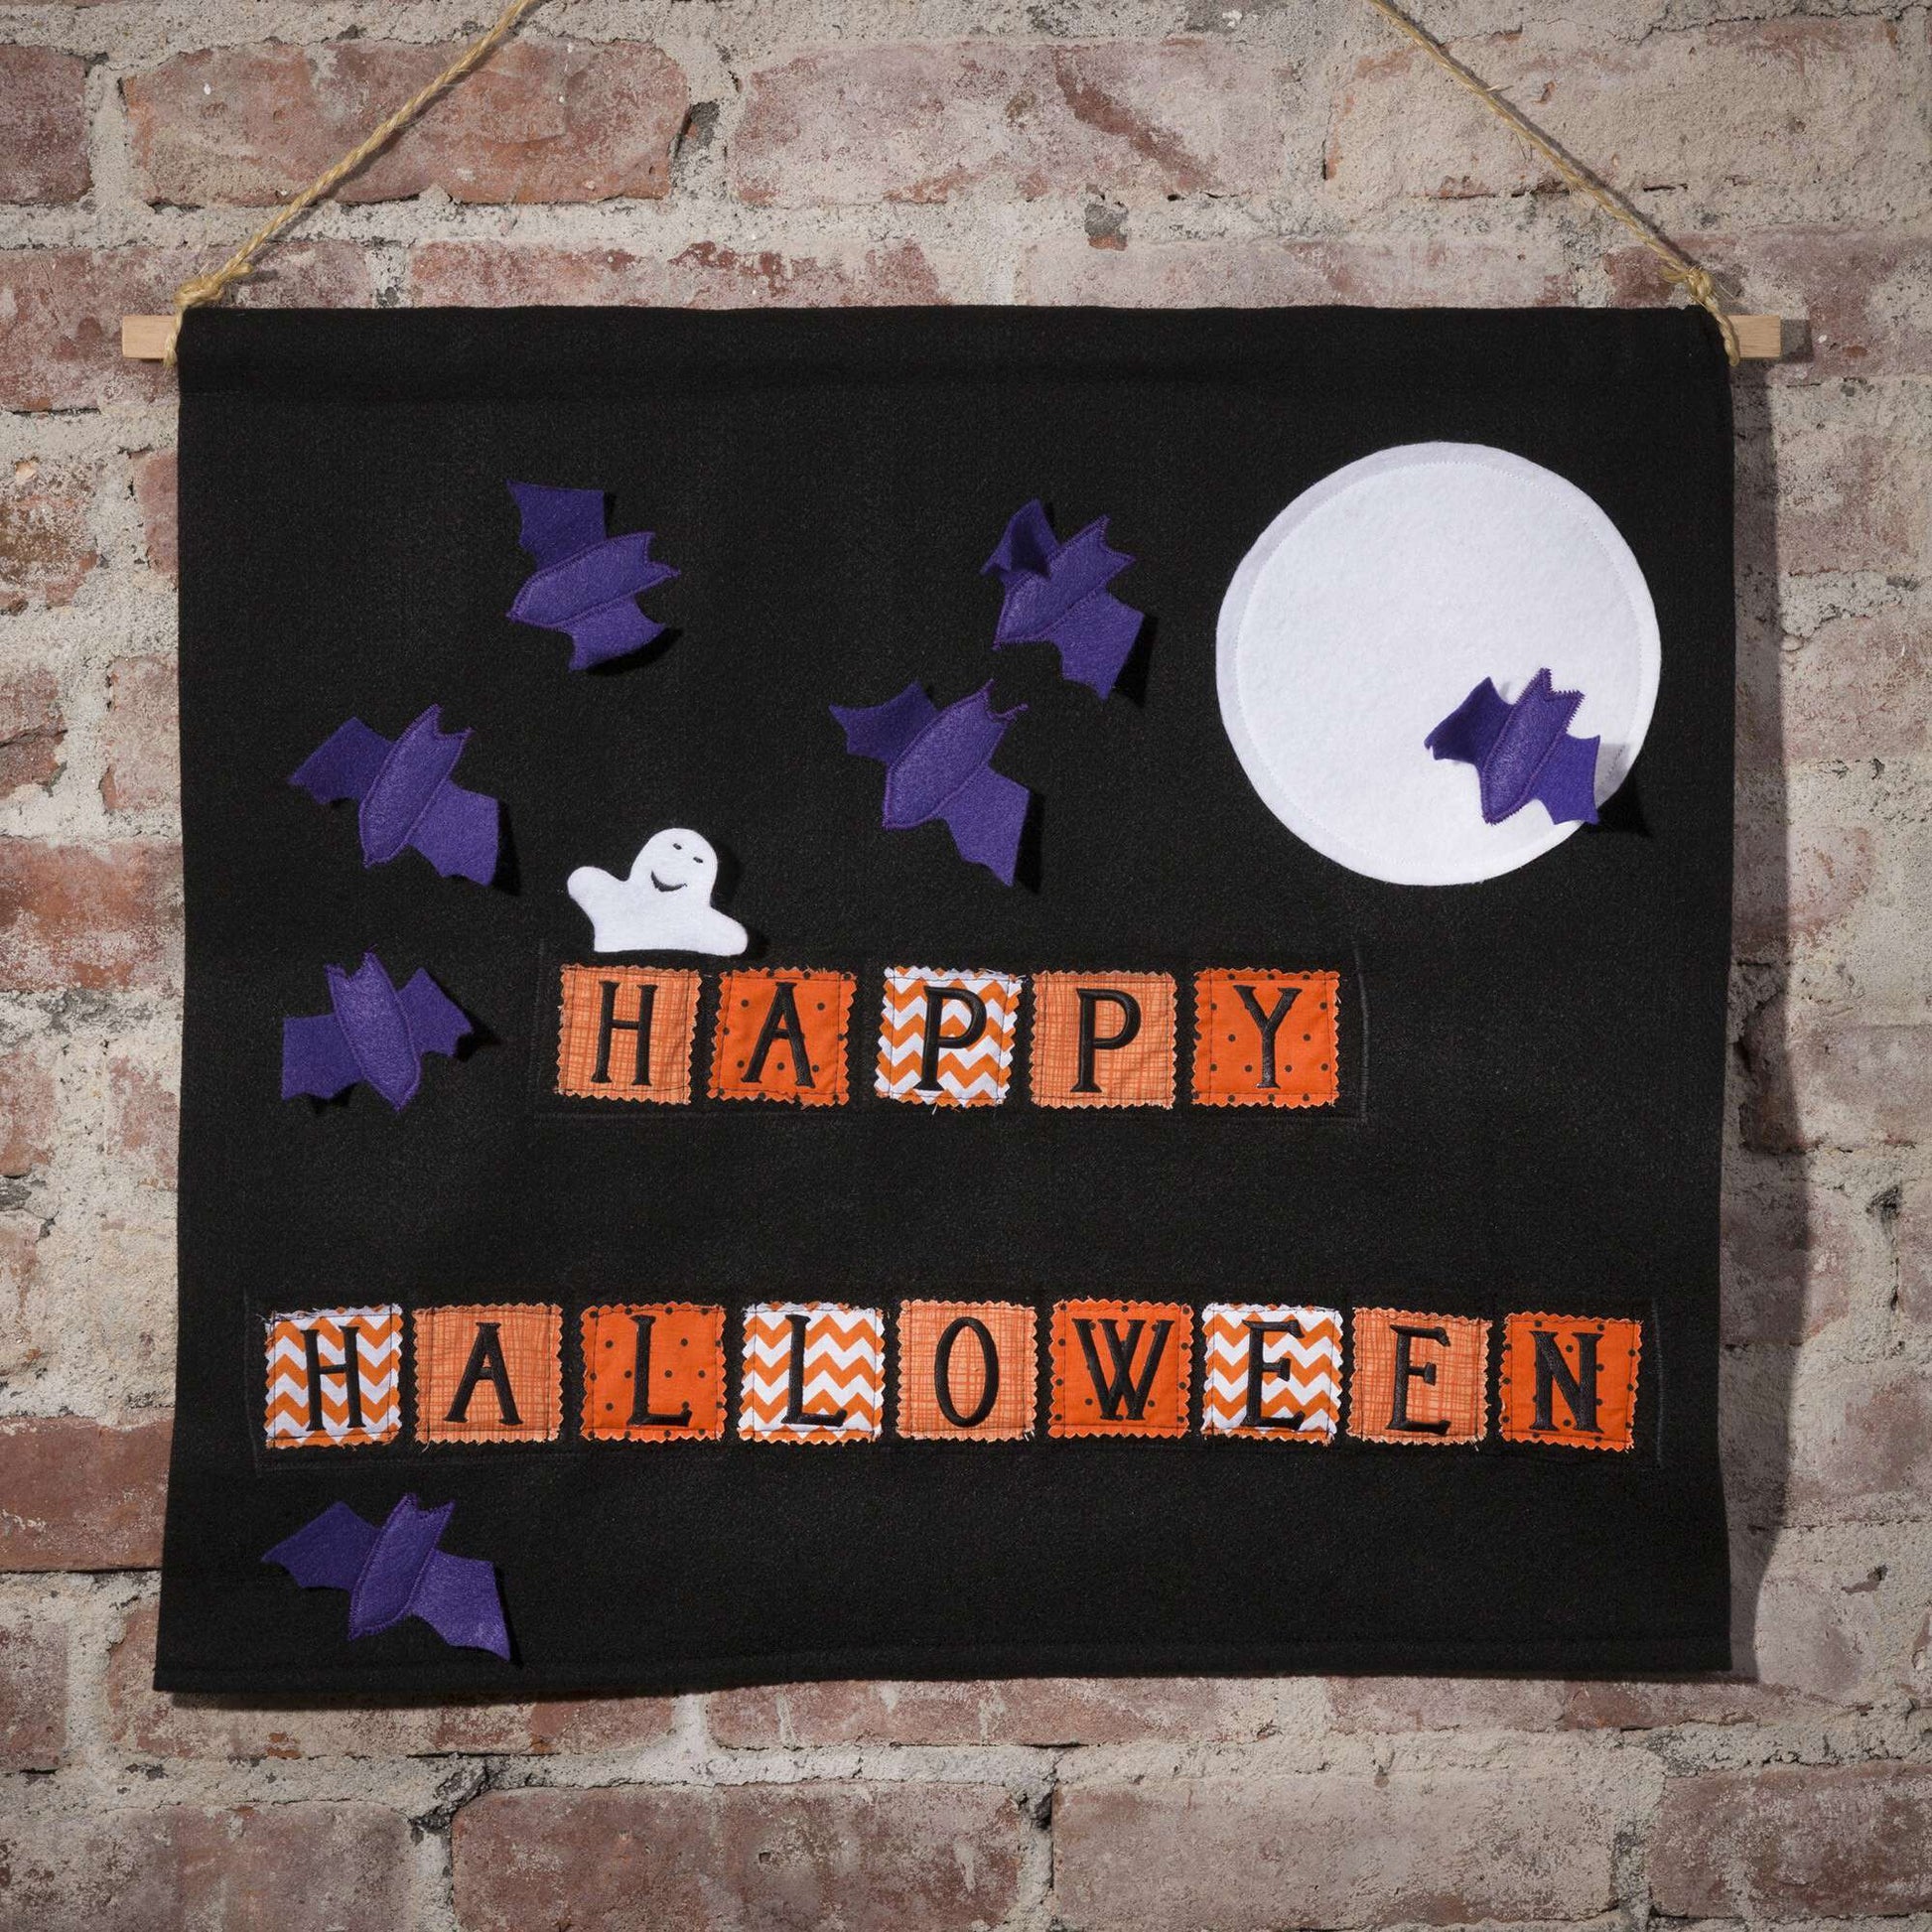 Free Coats & Clark Sewing Halloween Countdown Calendar Pattern